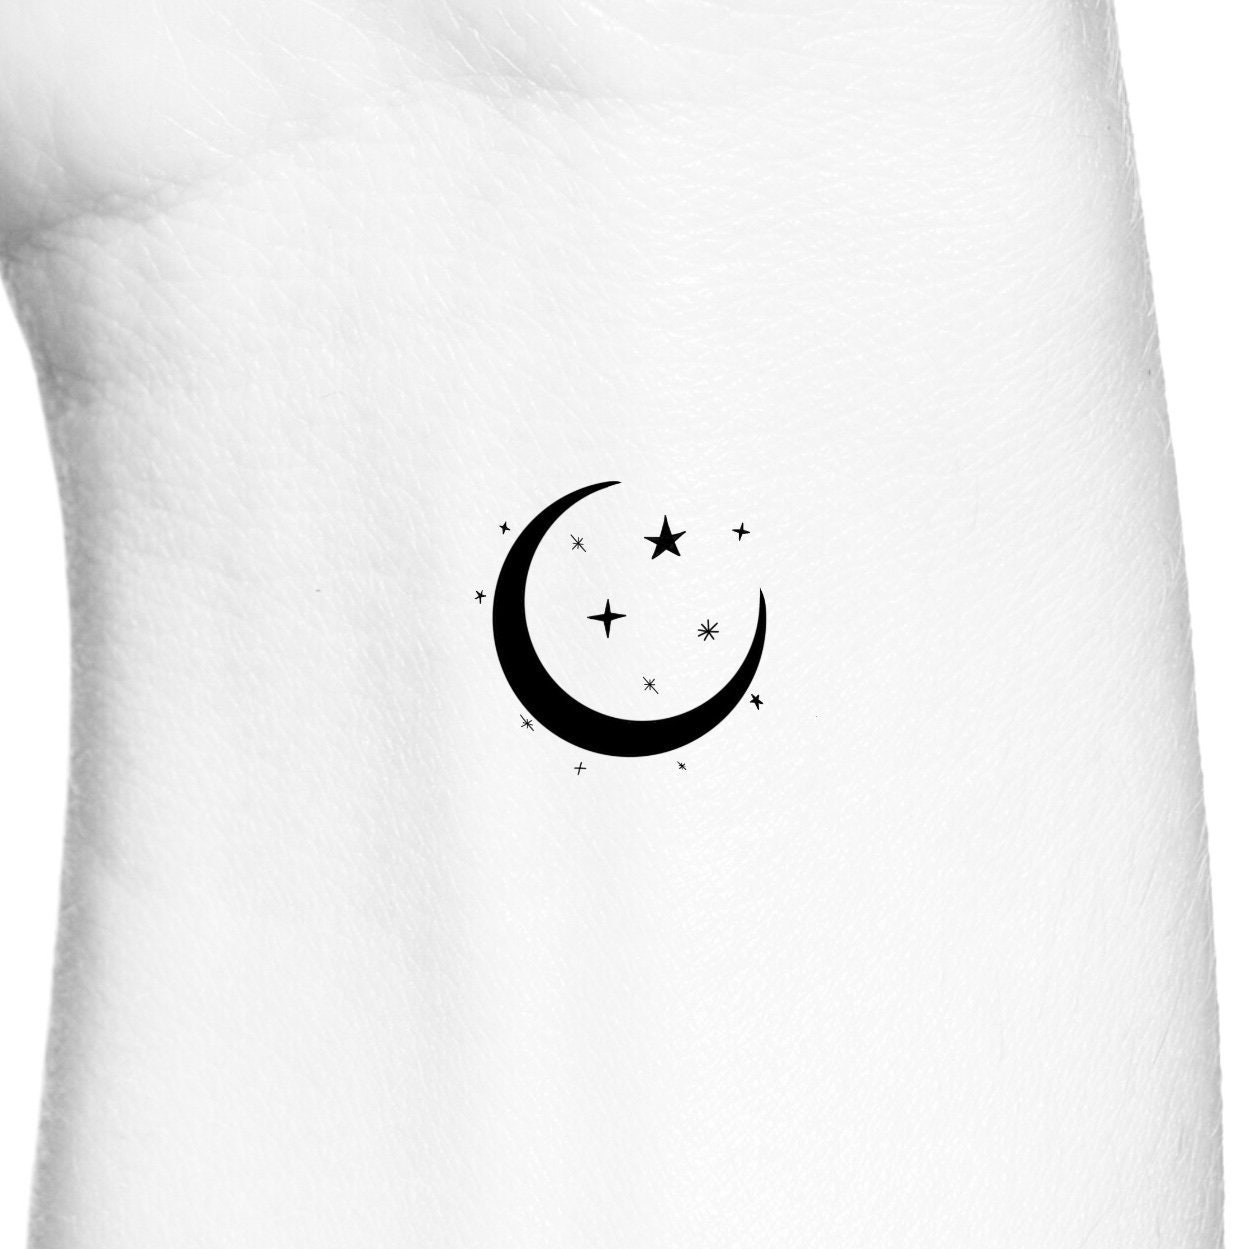 12397 Crescent Moon Tattoo Images Stock Photos  Vectors  Shutterstock